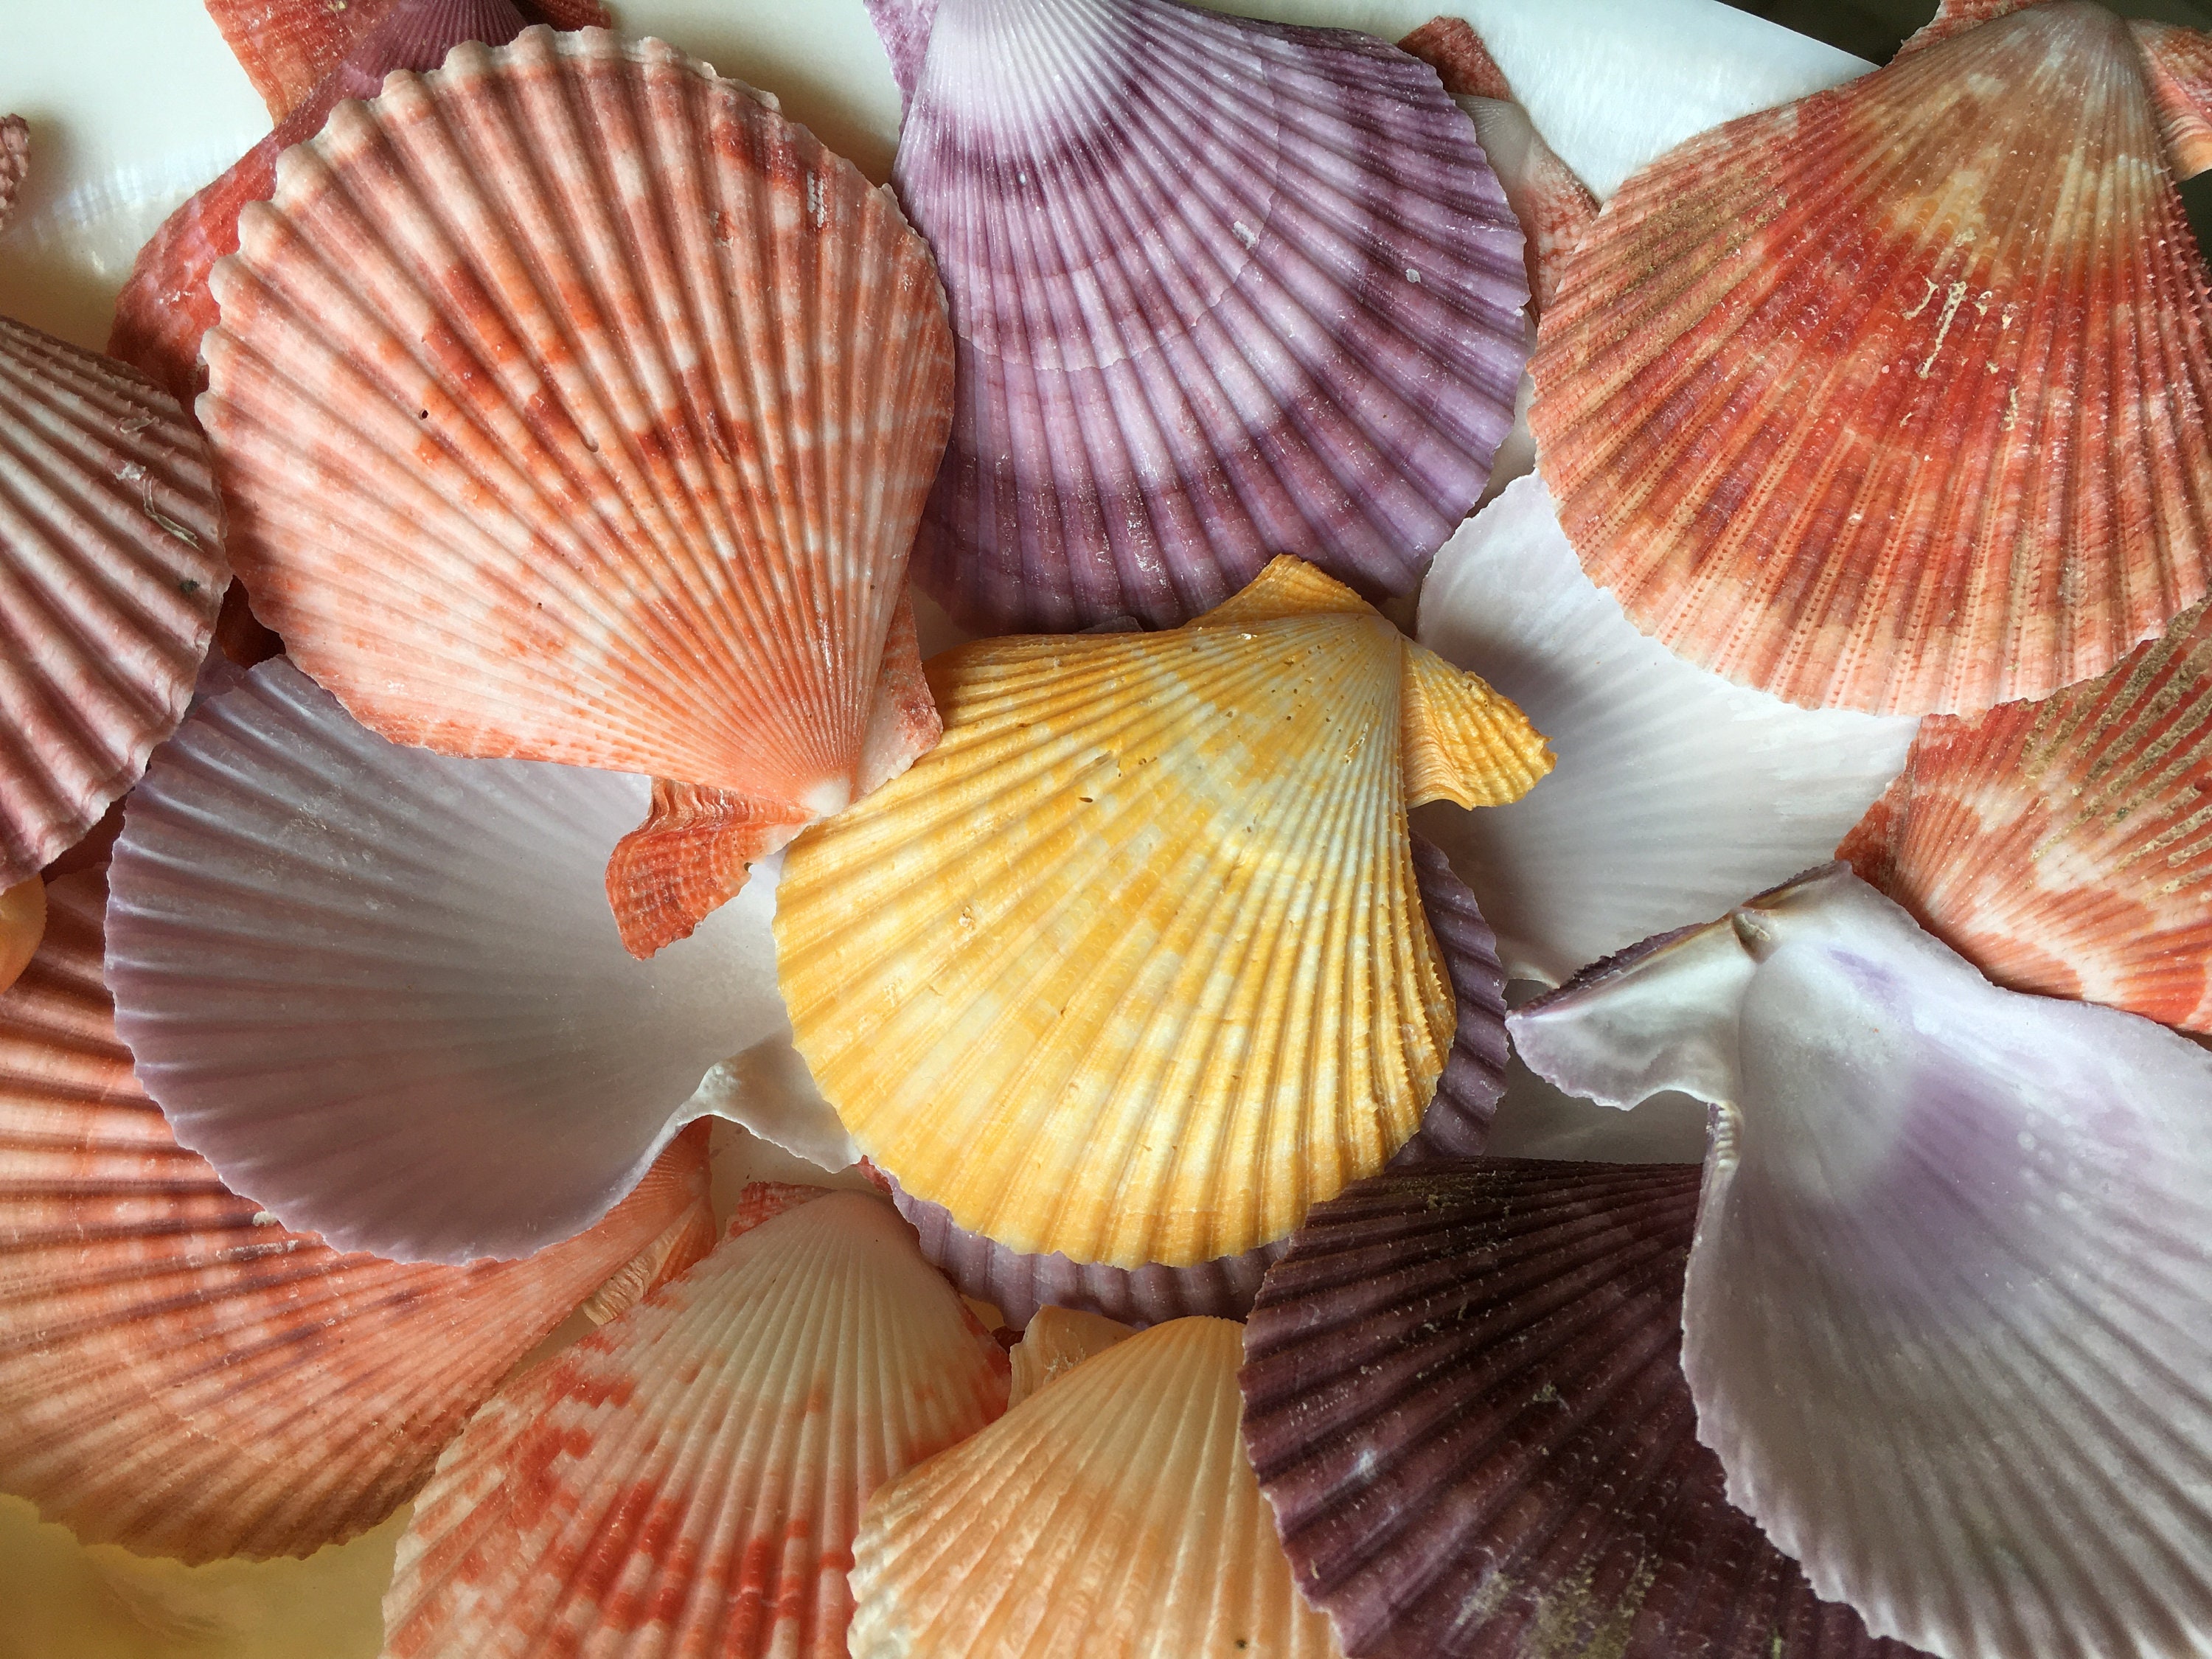 Small Scallop Shells-Shell Bulk-Seashell Supplies-Scallop Shells for  Crafts-Flat Scallop Shells-Pectin Shells-Wedding Decor-Flat Scallops